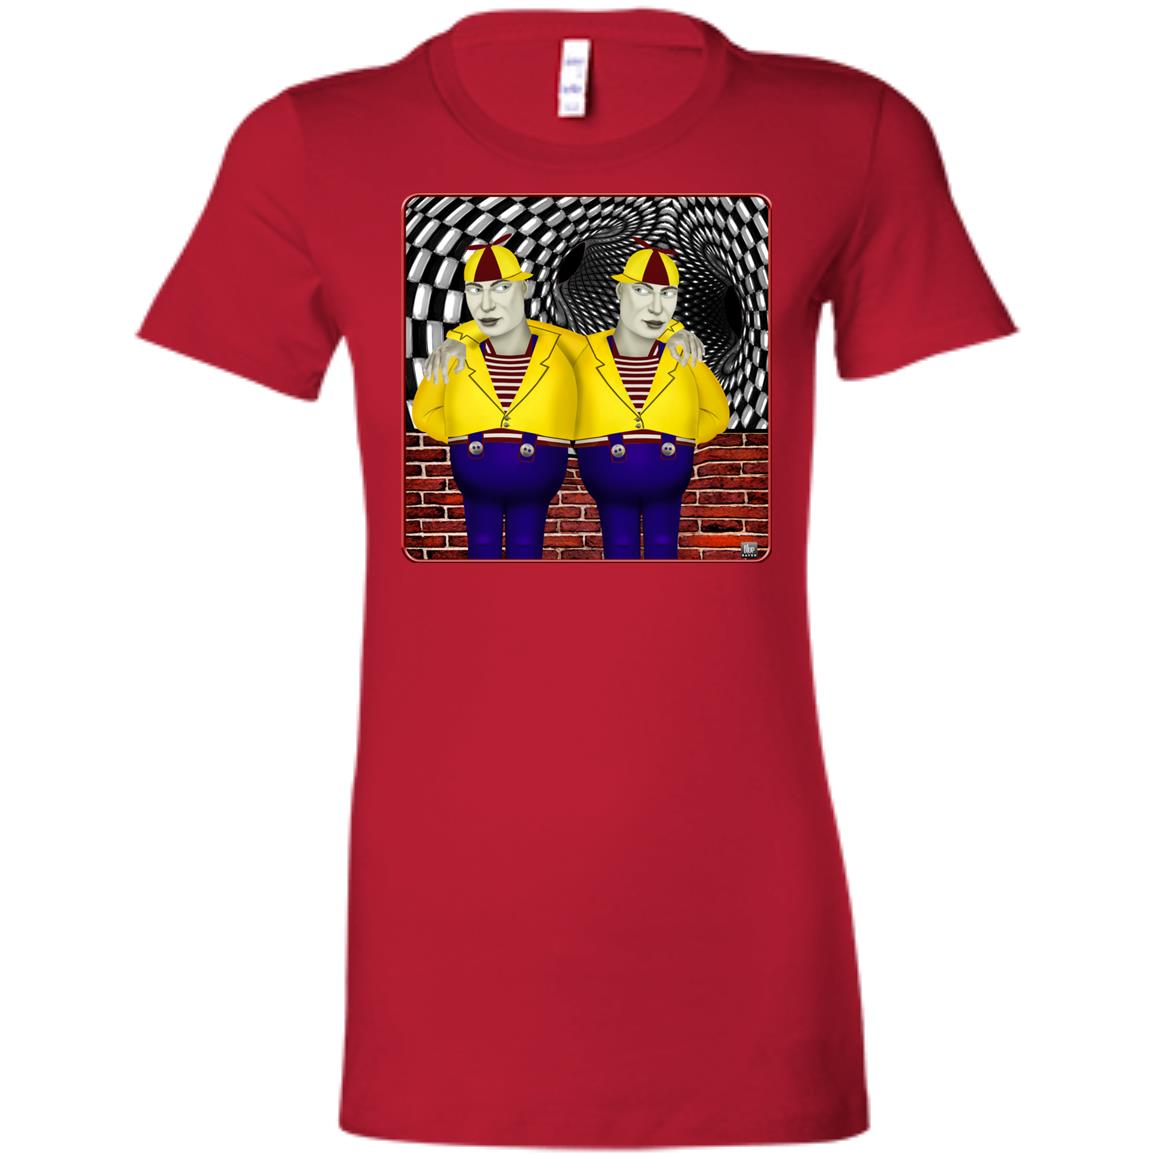 tweedledee and dum - Women's Fitted T-Shirt